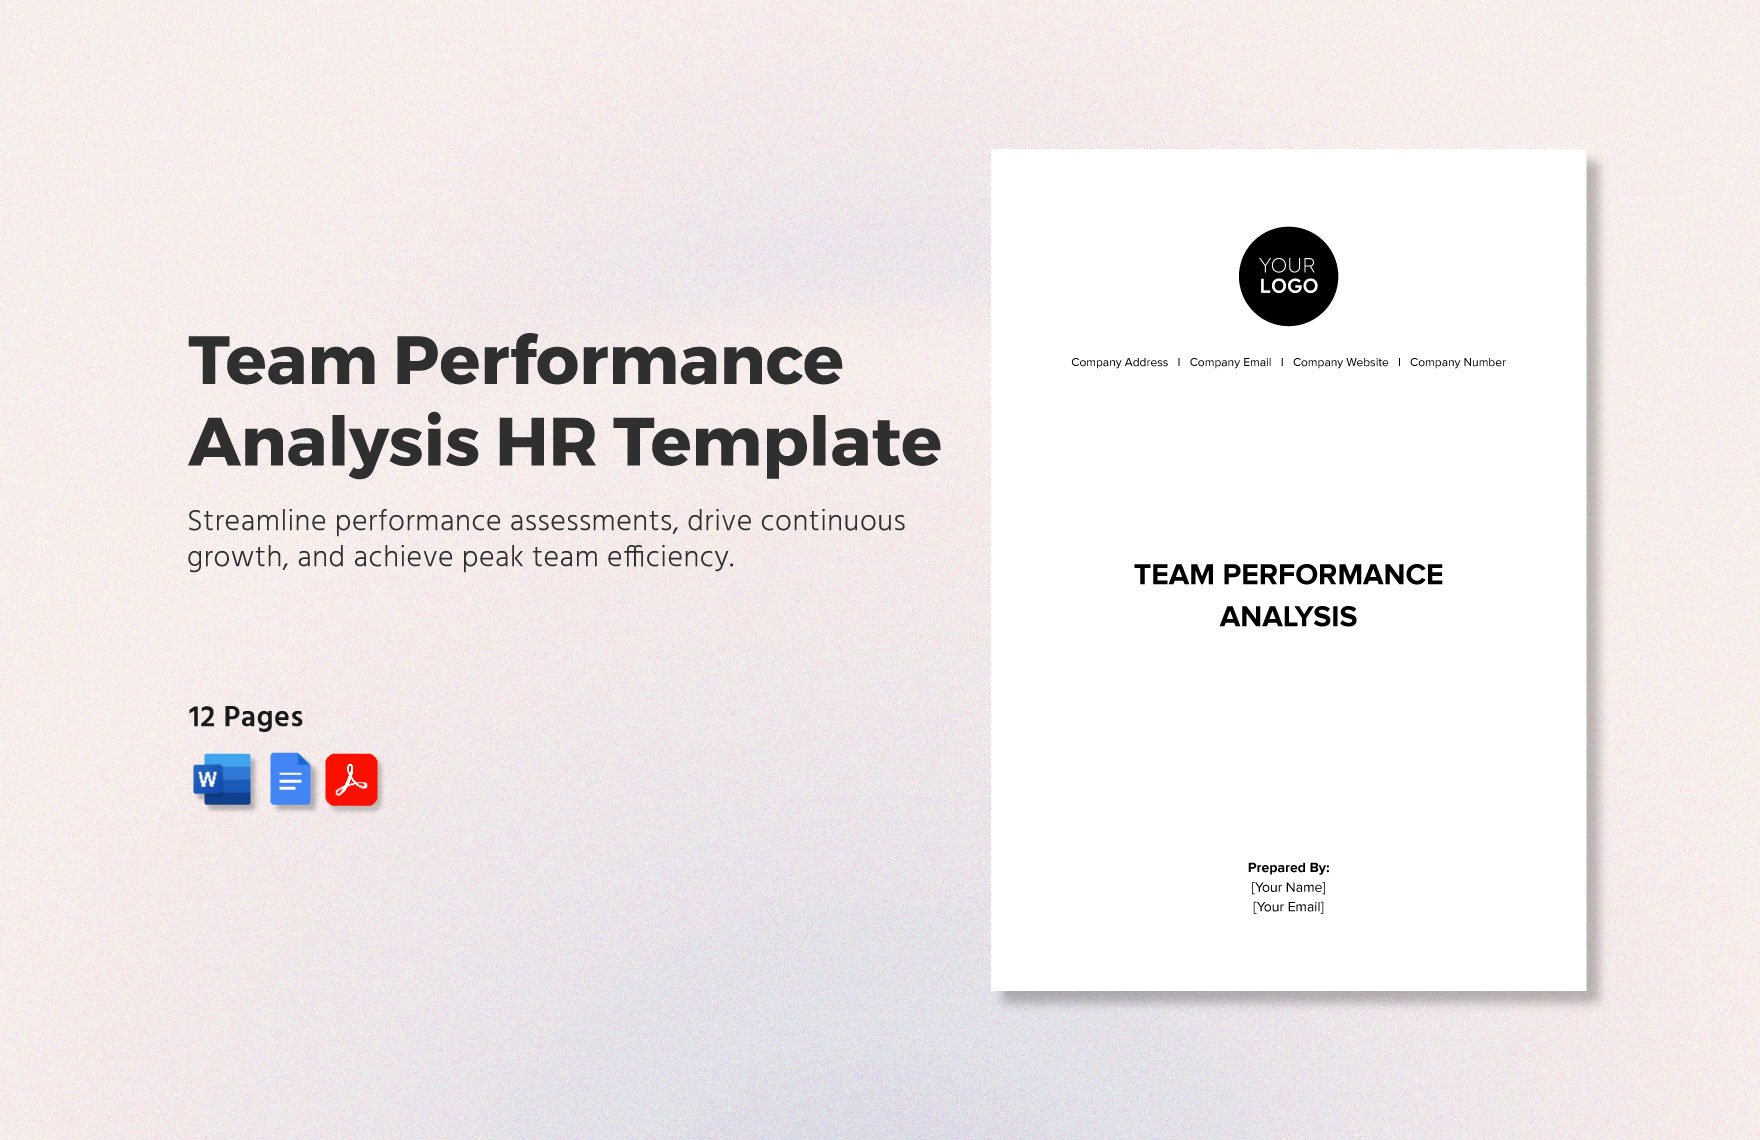 Team Performance Analysis HR Template